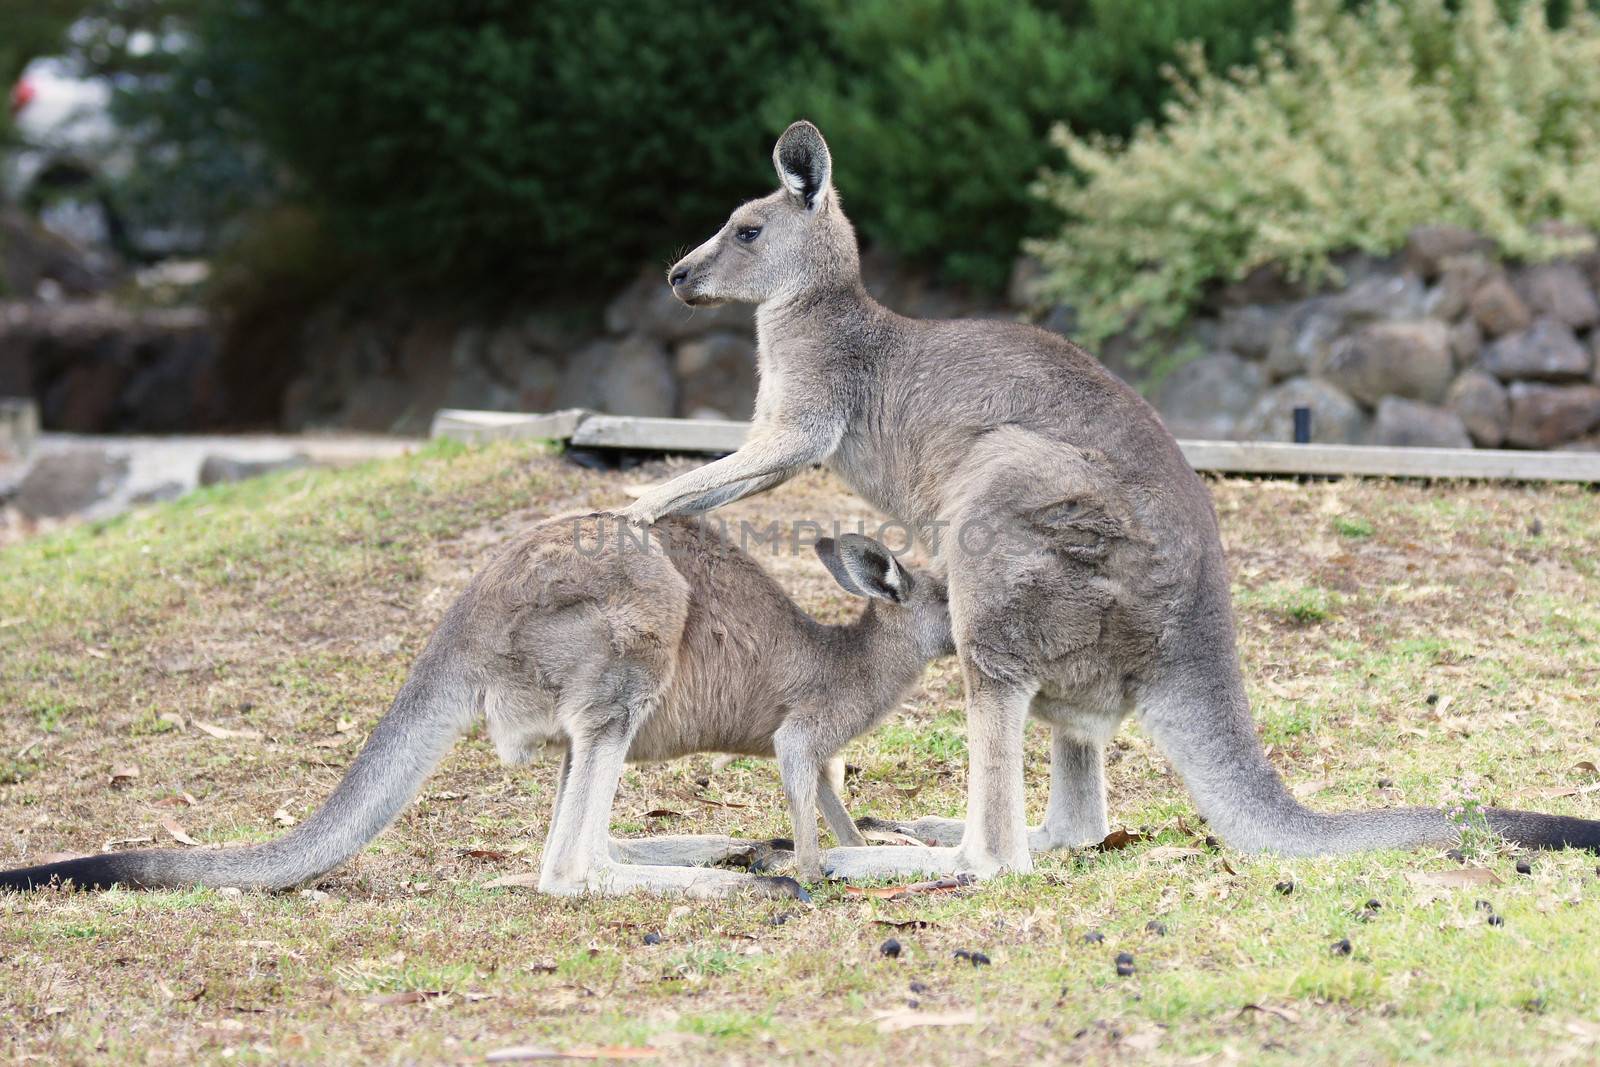 Great Grey Kangaroo, Grampians National Park, Australia